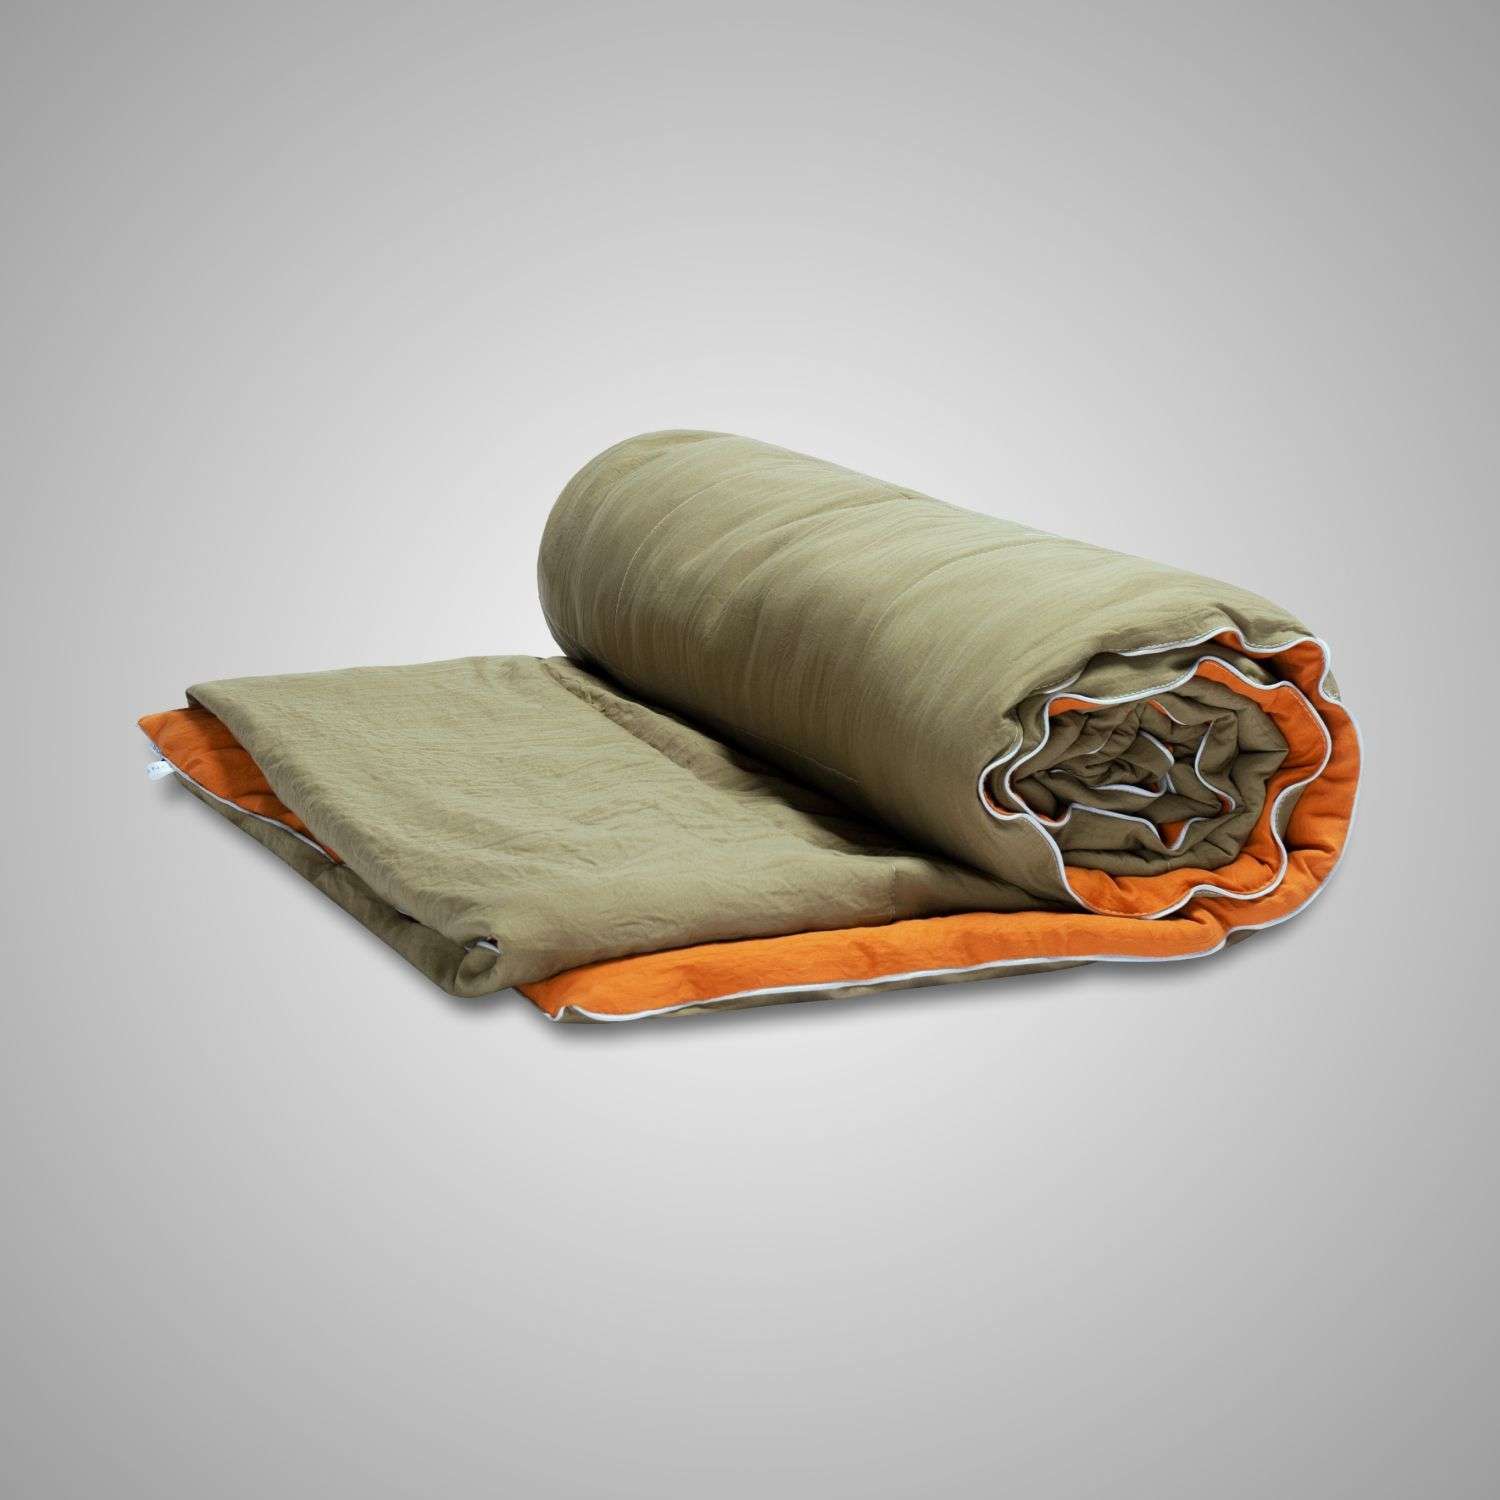 Одеяло SONNO TWIN евро размер 200х220 см цвет оранжевый оливковый - фото 2